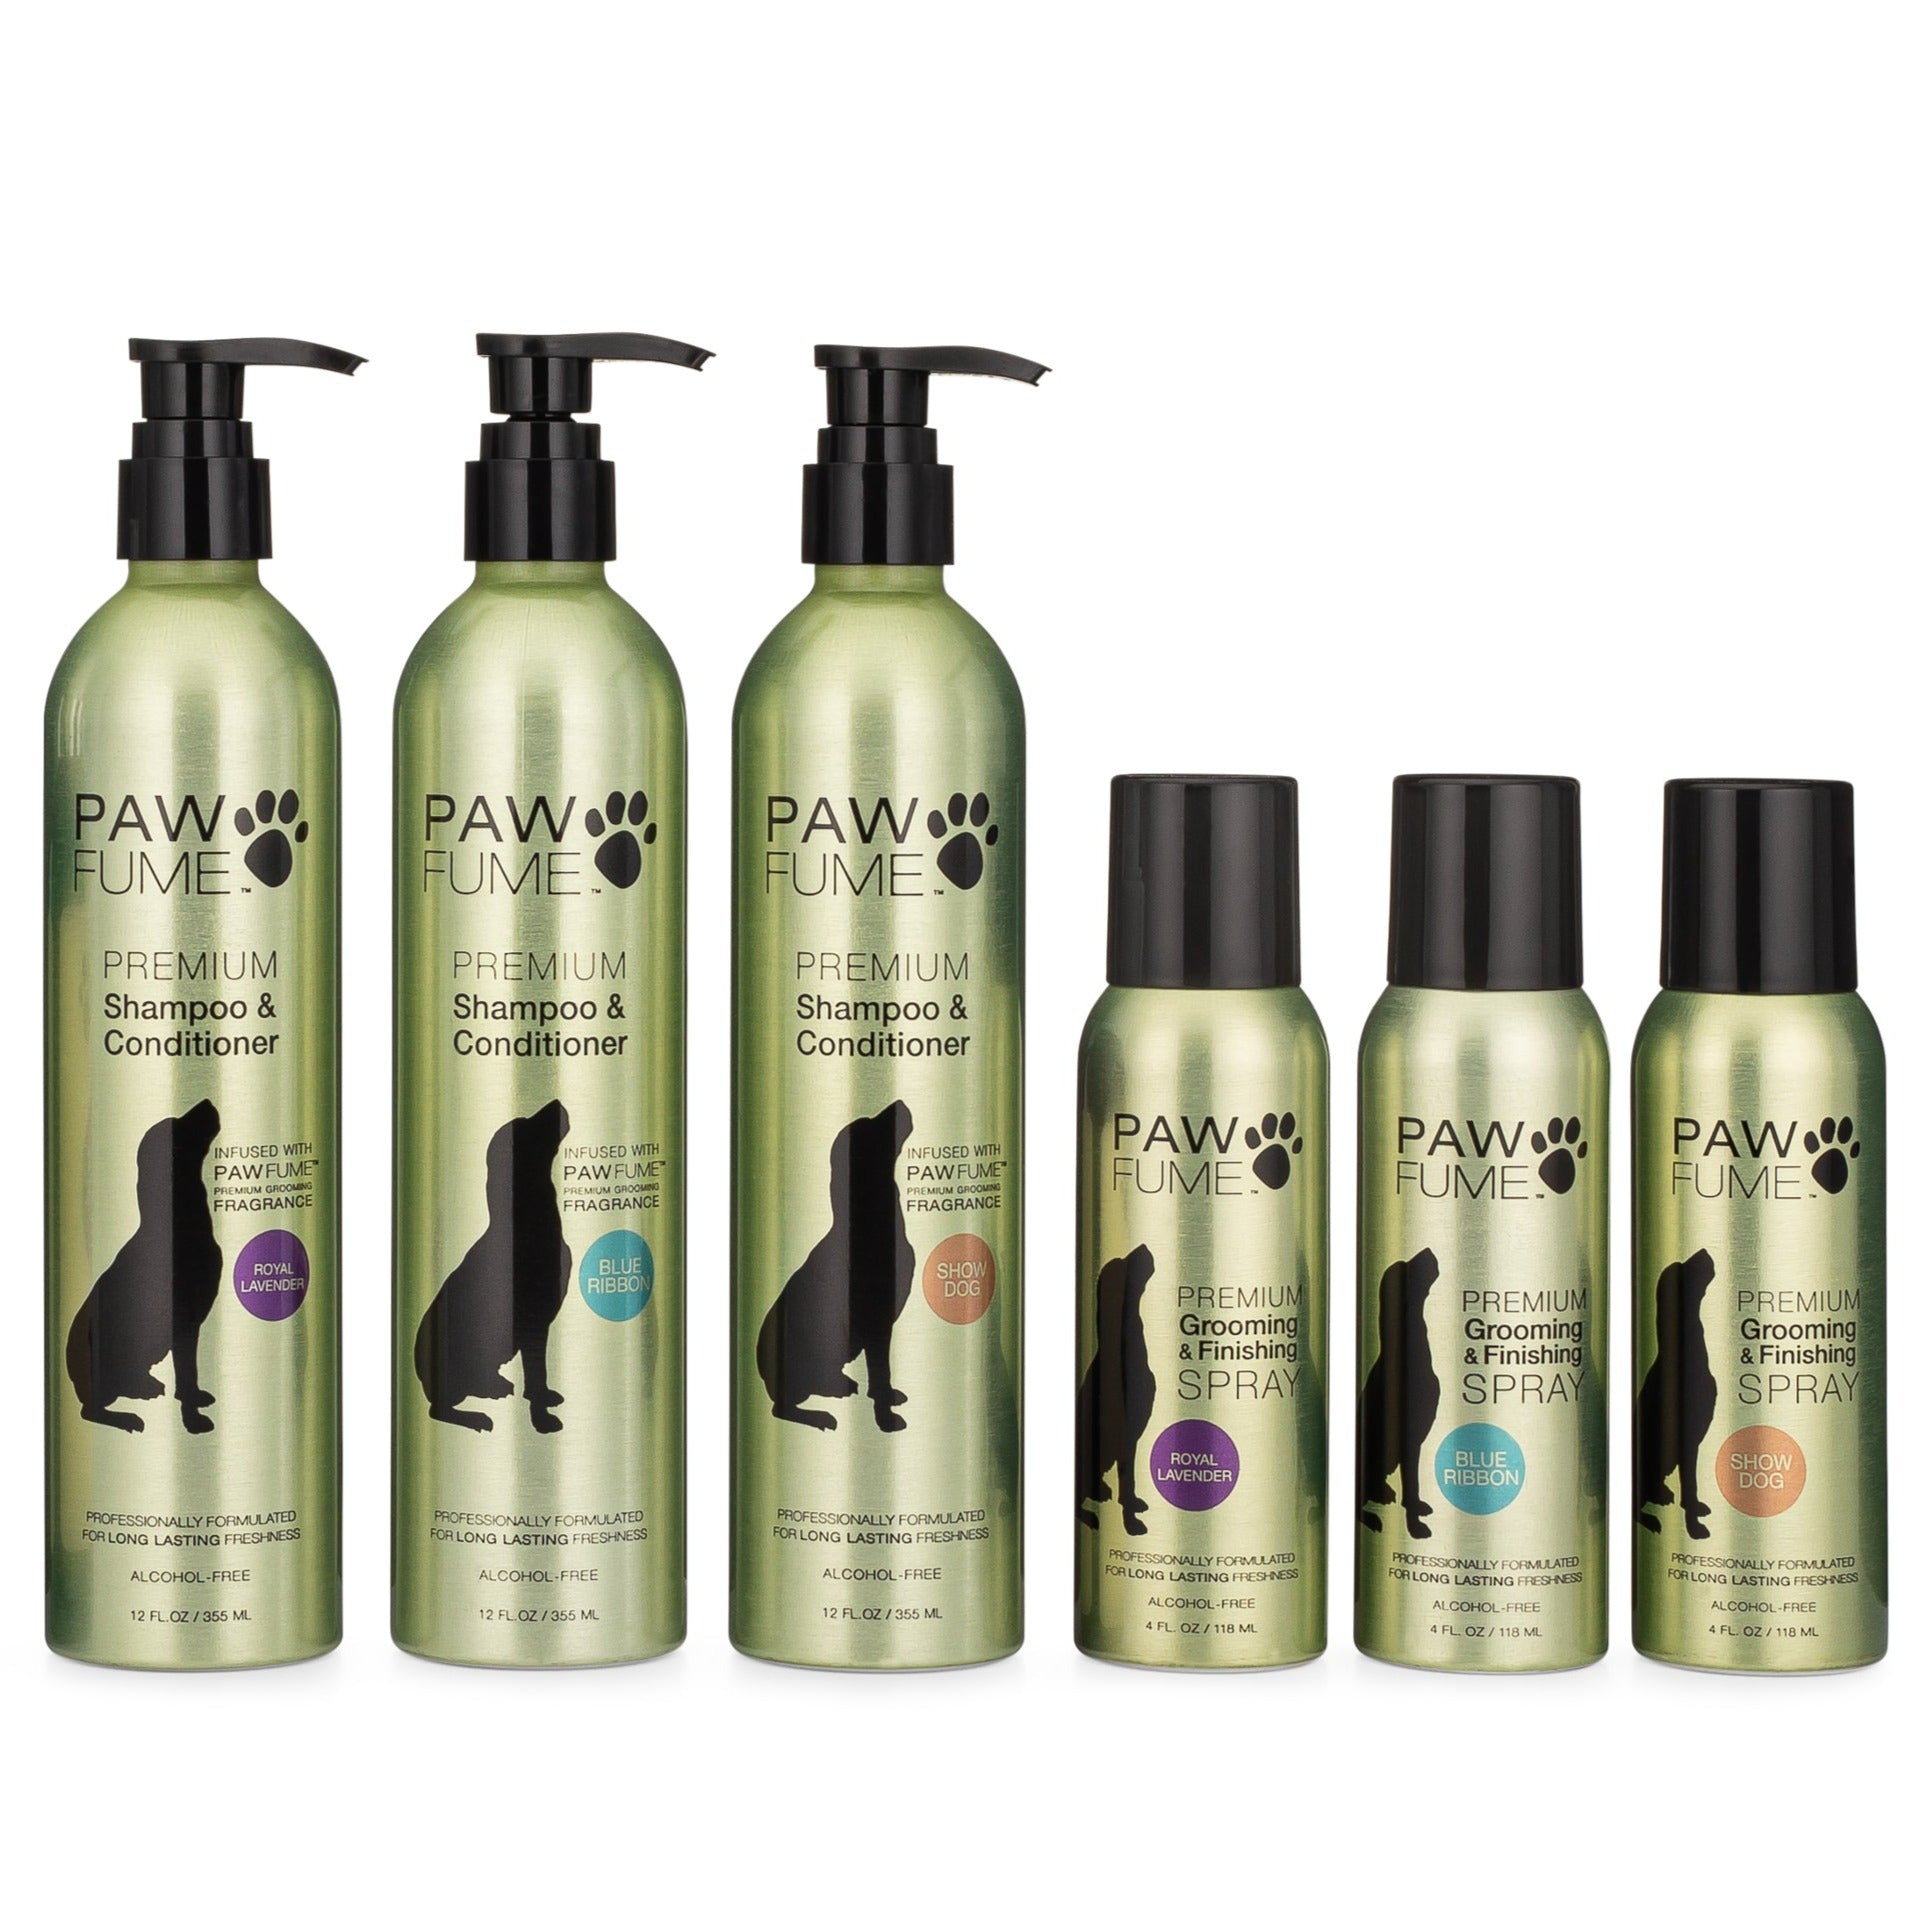 Free pet shampoo samples